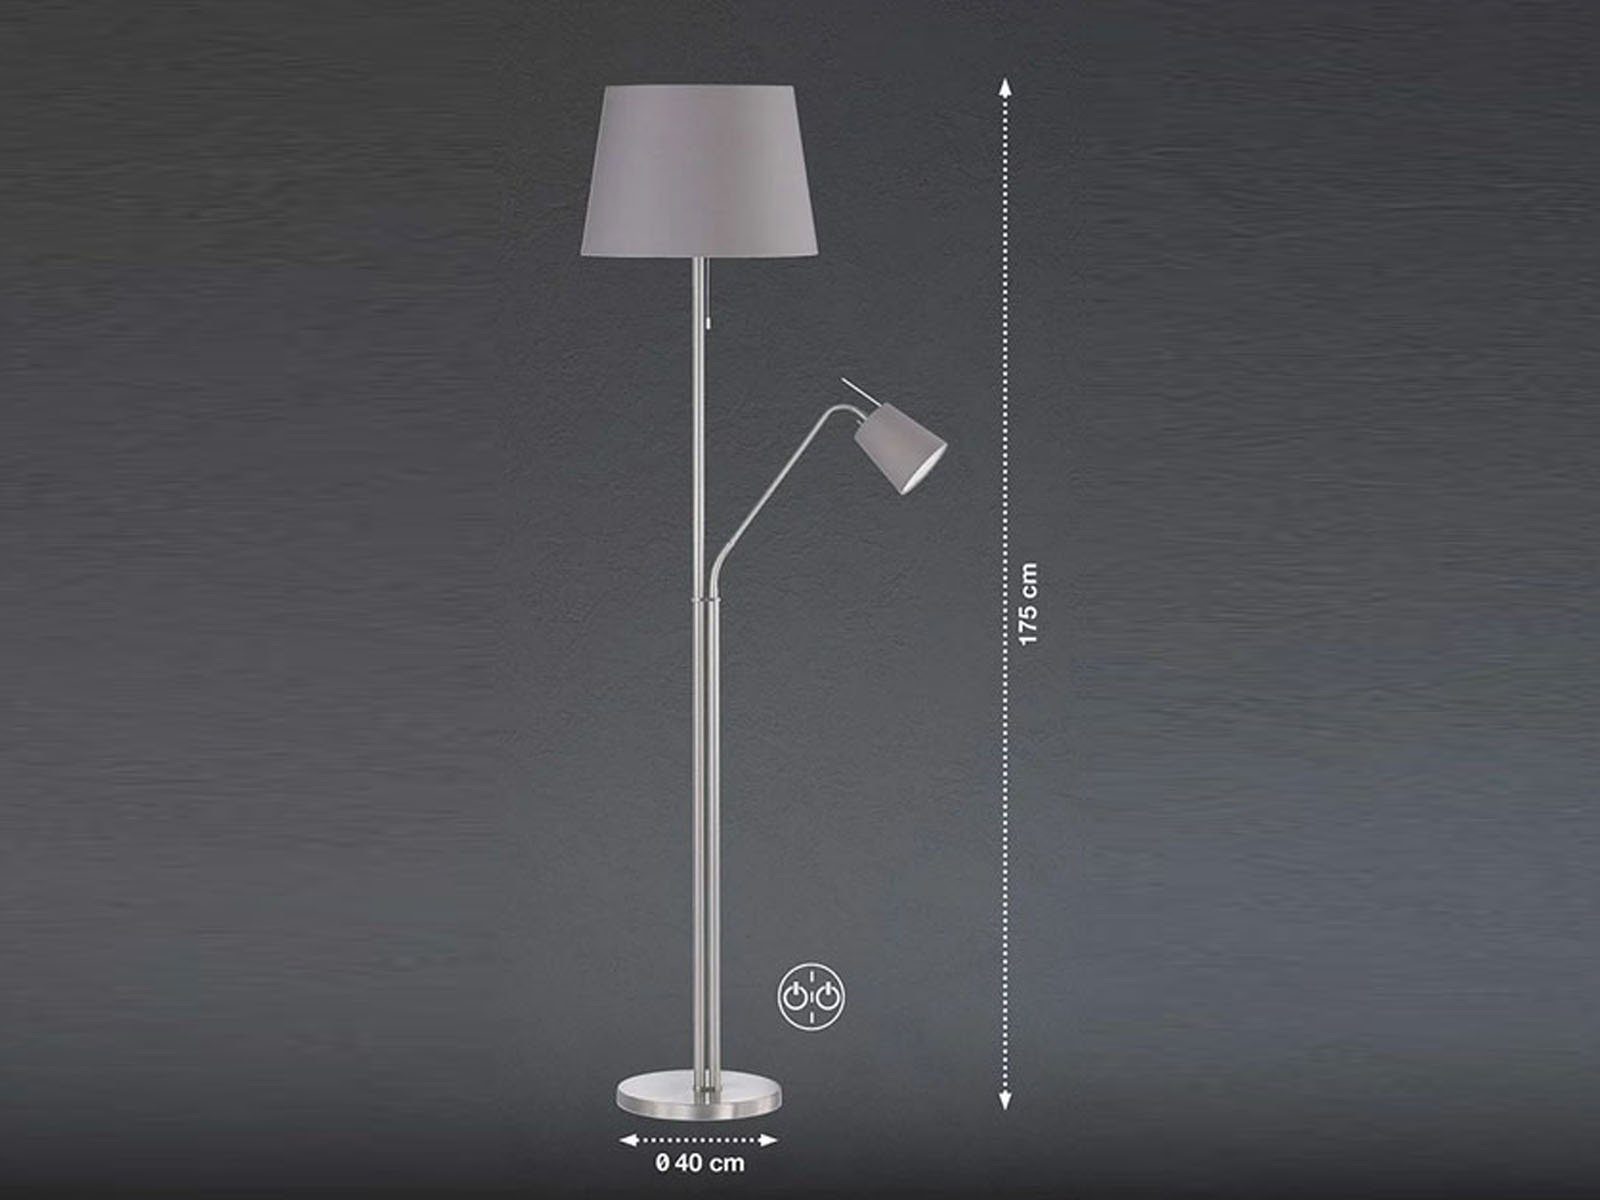 Leselampe meineWunschleuchte Stehlampe, 175cm LED Lampen-schirm Große Wamweiß, mit LED Stoff wechselbar, Grau, Designklassiker H: Lesearm,